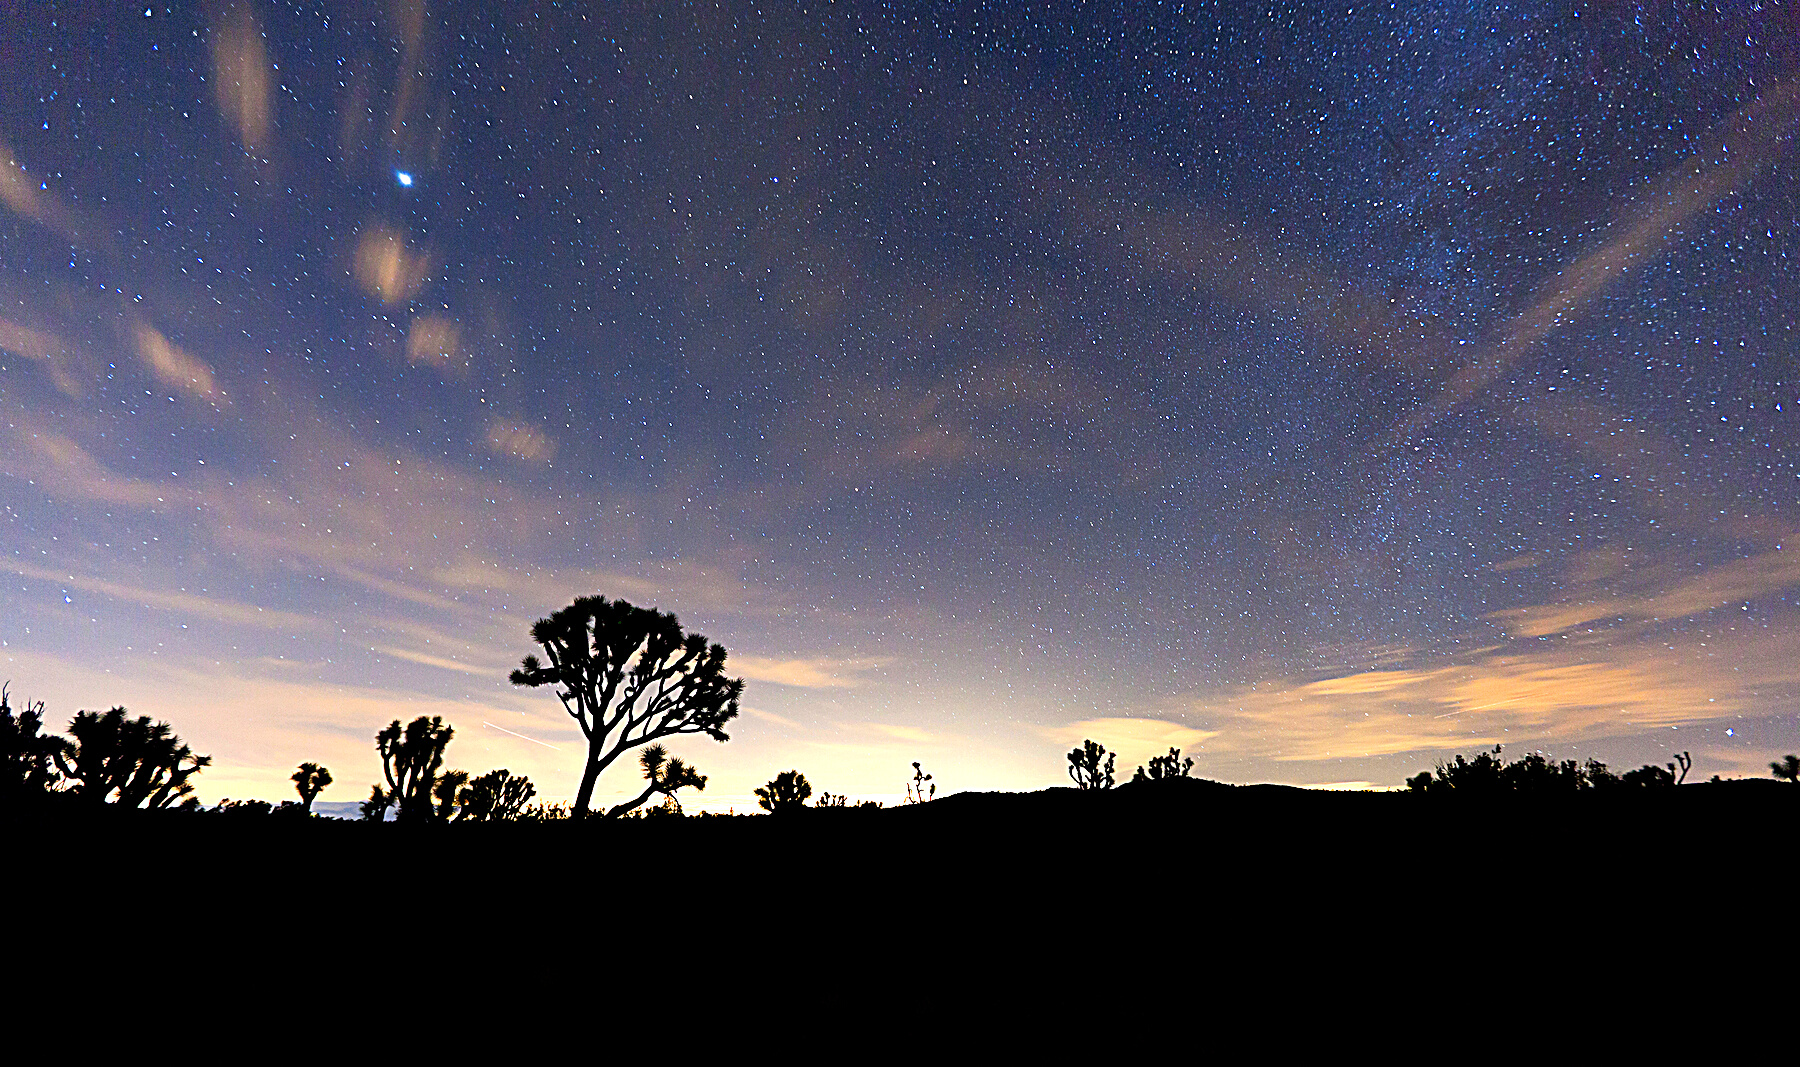 Night Sky at Joshua Tree National Park